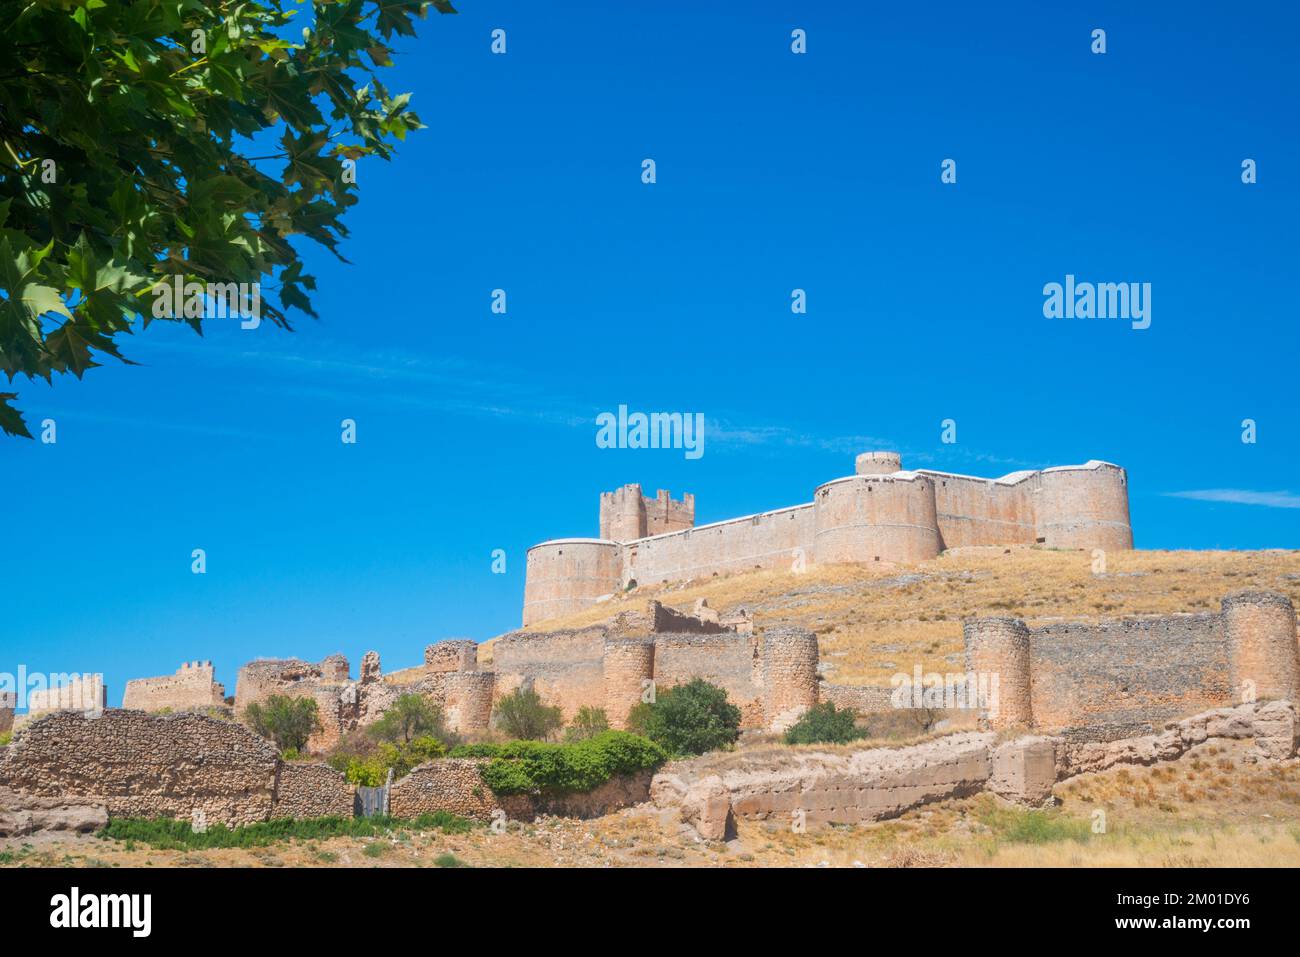 Medieval castloe and city walls. Berlanga de Duero, Soria province, Castilla Leon, Spain. Stock Photo